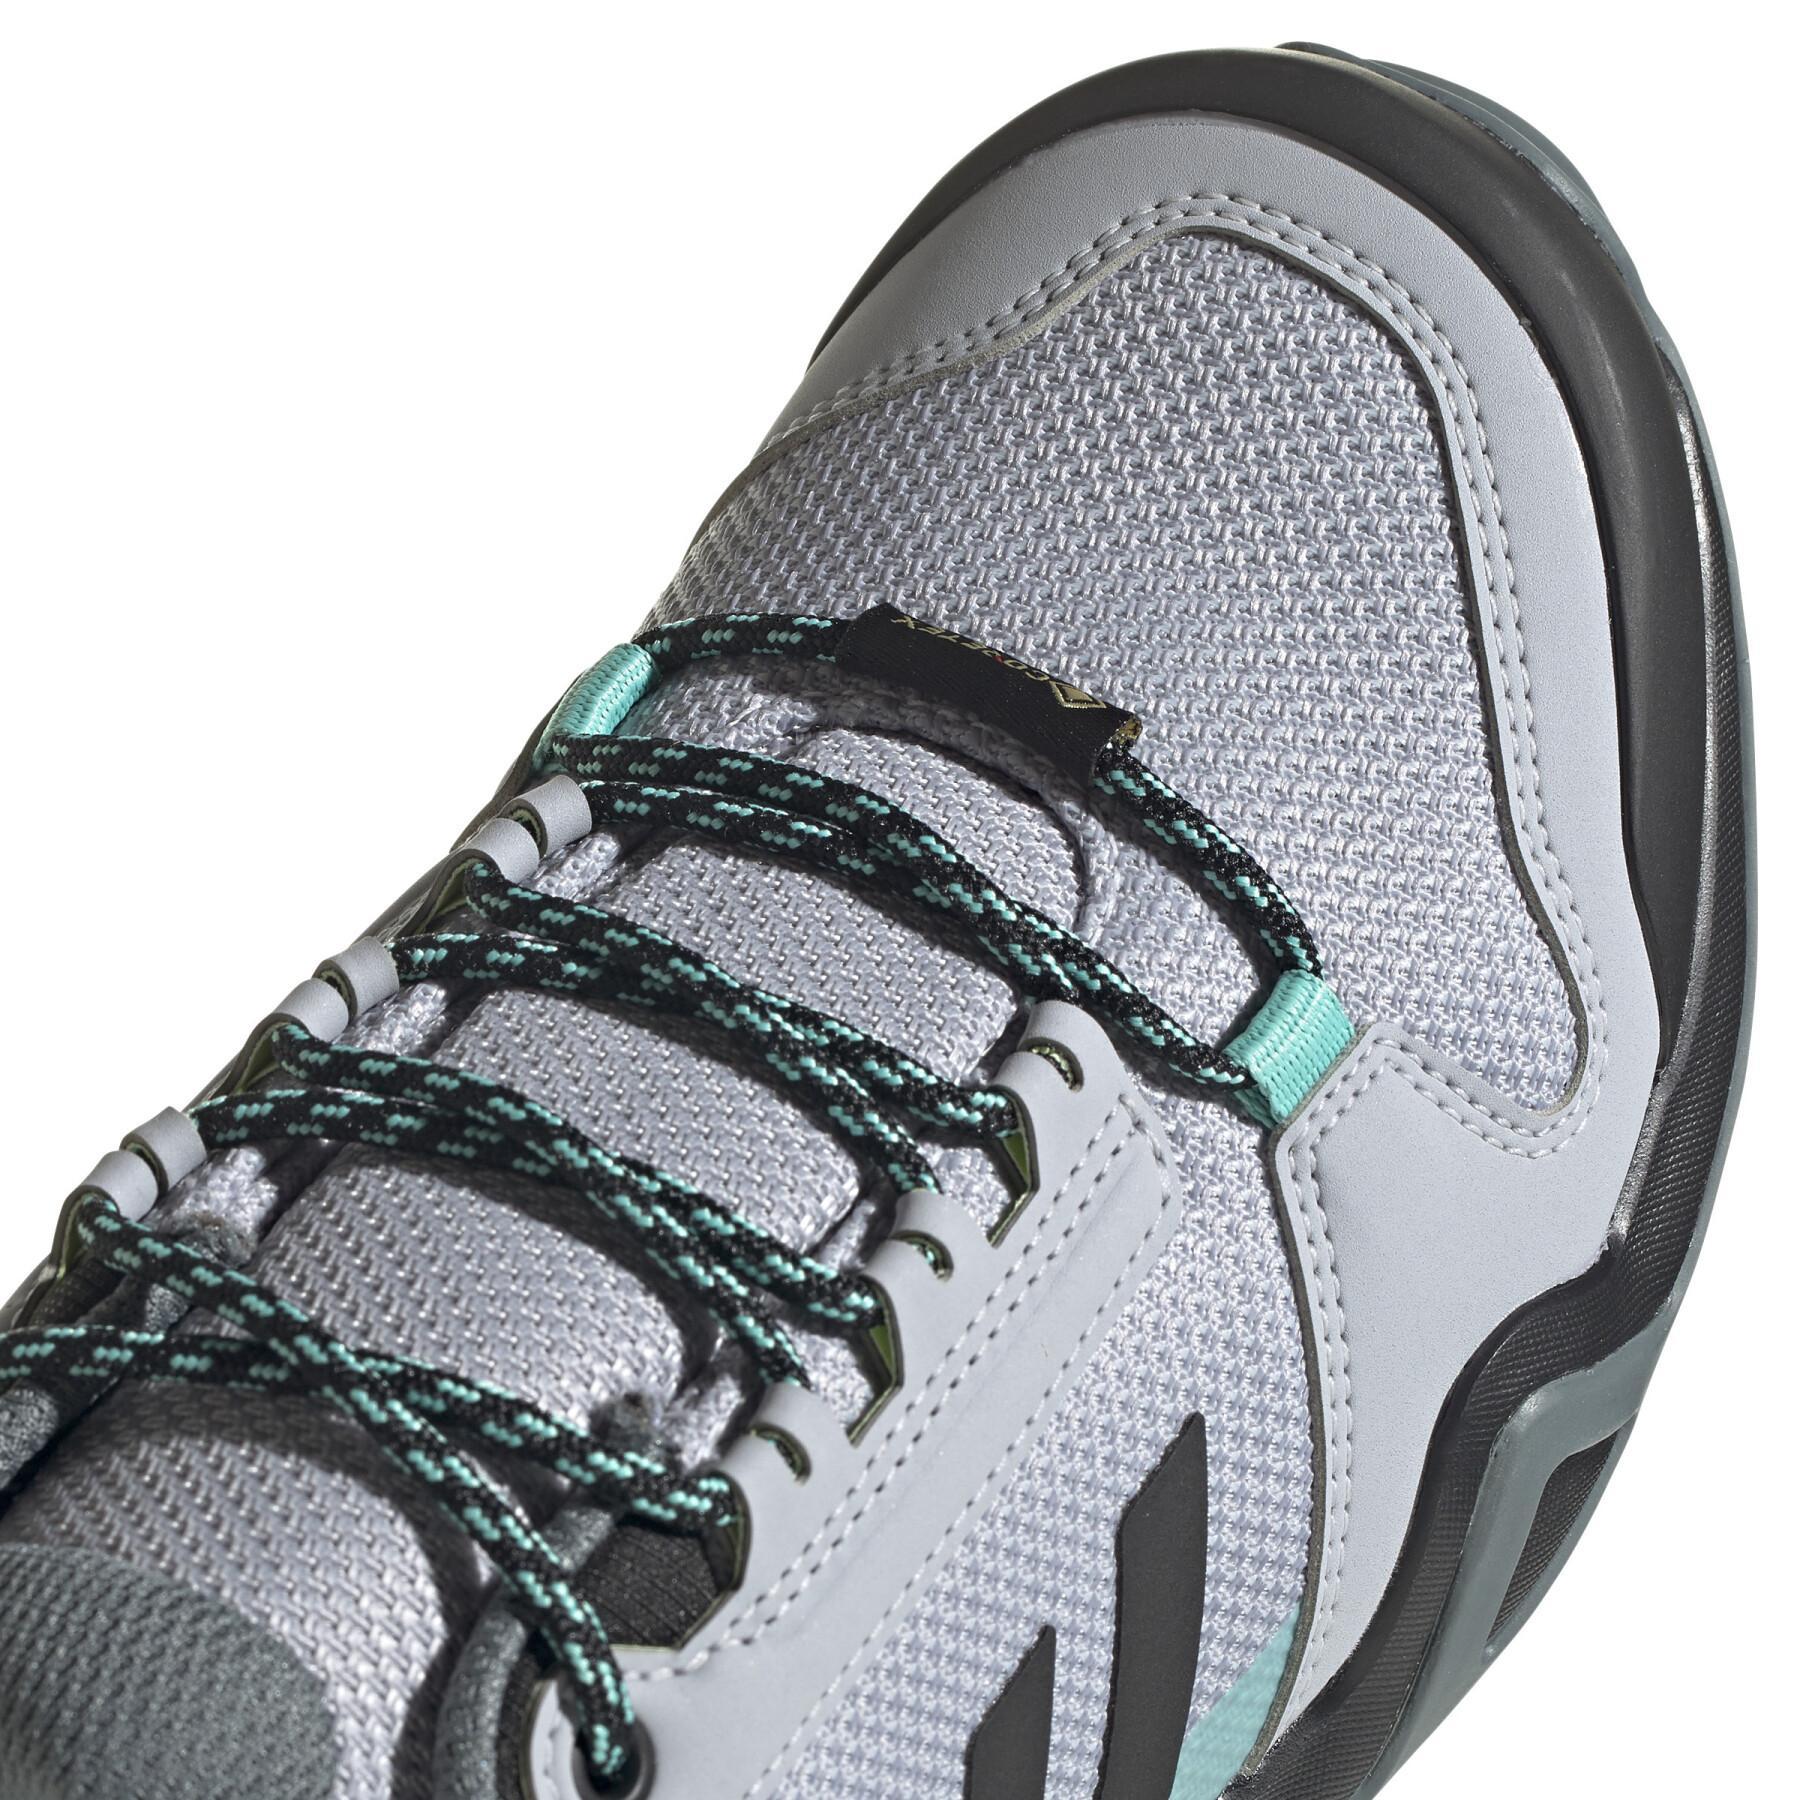 Women's hiking shoes adidas Terrex AX3 Gore-Tex